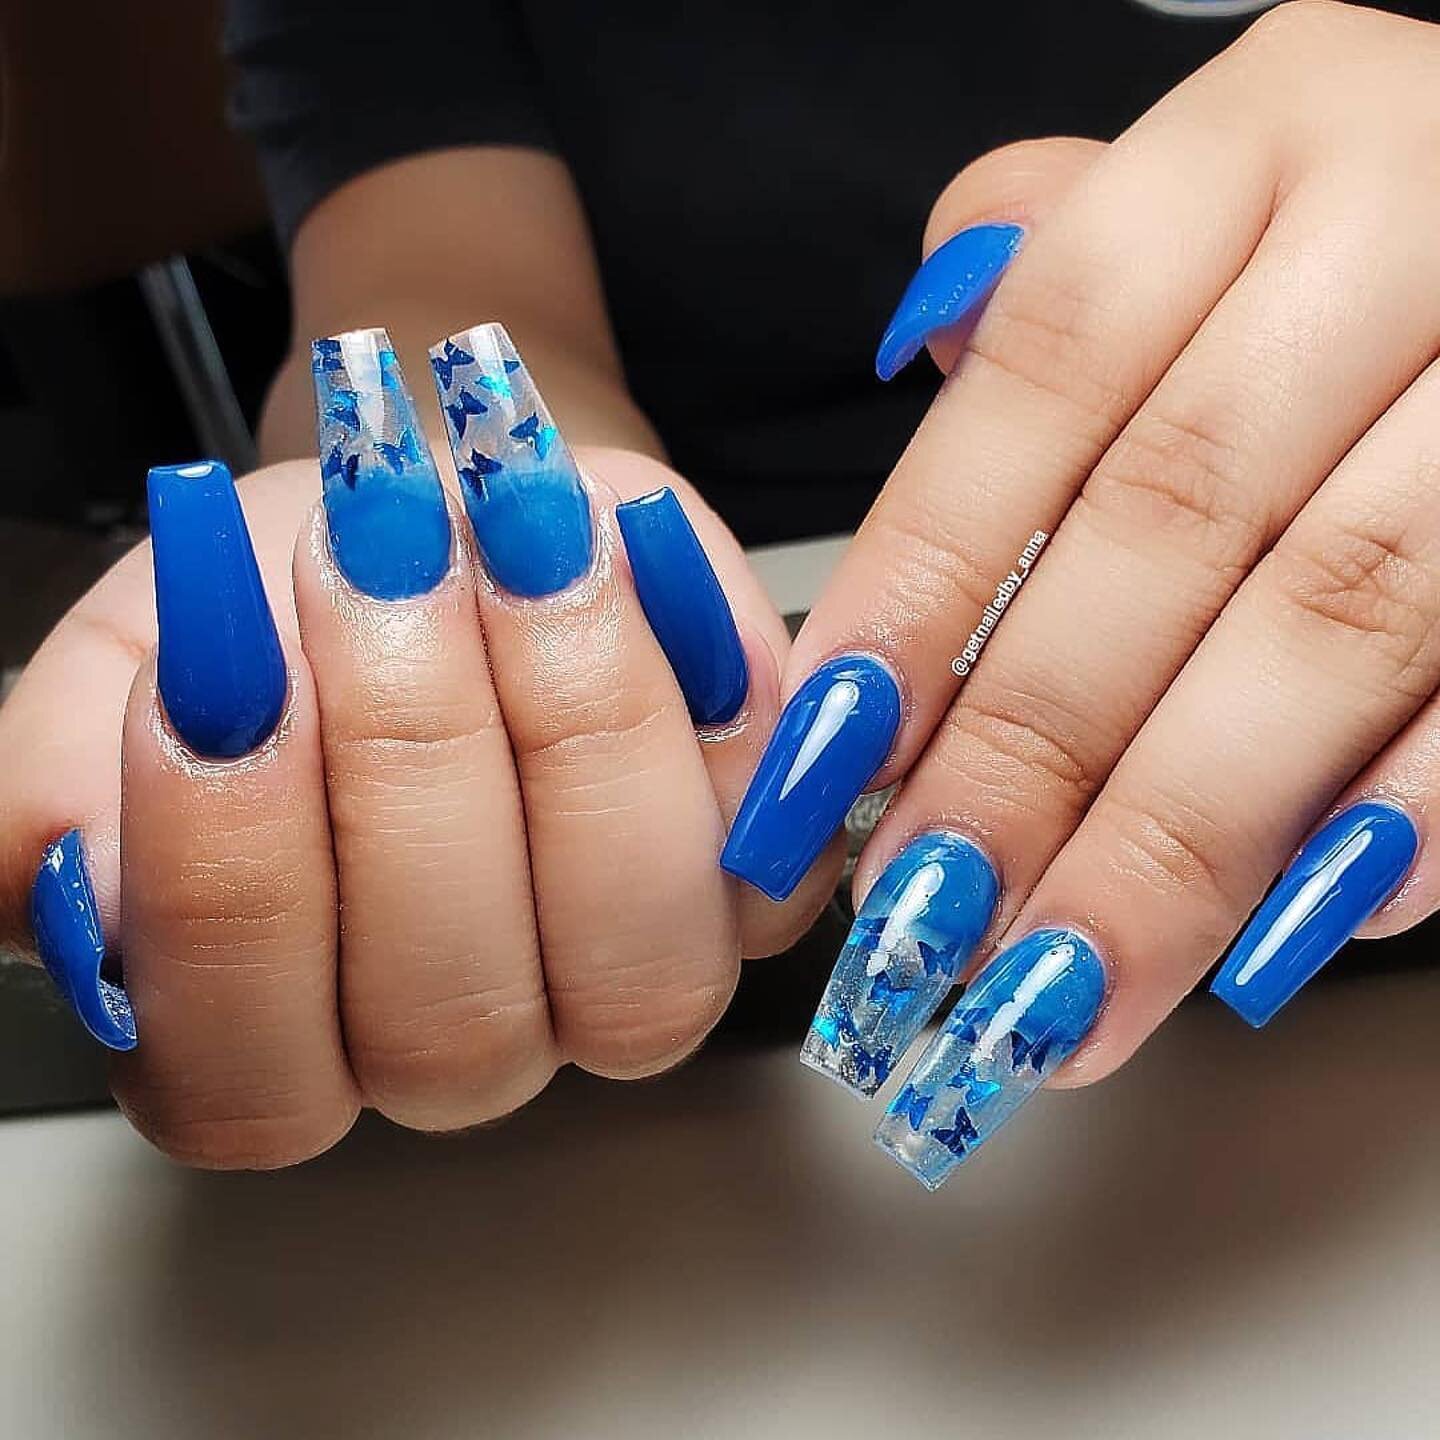 #Repost @getnailedby_anna
・・・
🦋🦋🦋

#nailarts #nailsbyme&nbsp; #jerseycitynails #gelmanicure #naildesigns #nailsoftheday #NOTD #njnailartist #jcnailtech #nailarts #abstractnails #nailcolors #jerseycity #nailarts #gelmanicure #hands #fingers #gelnai